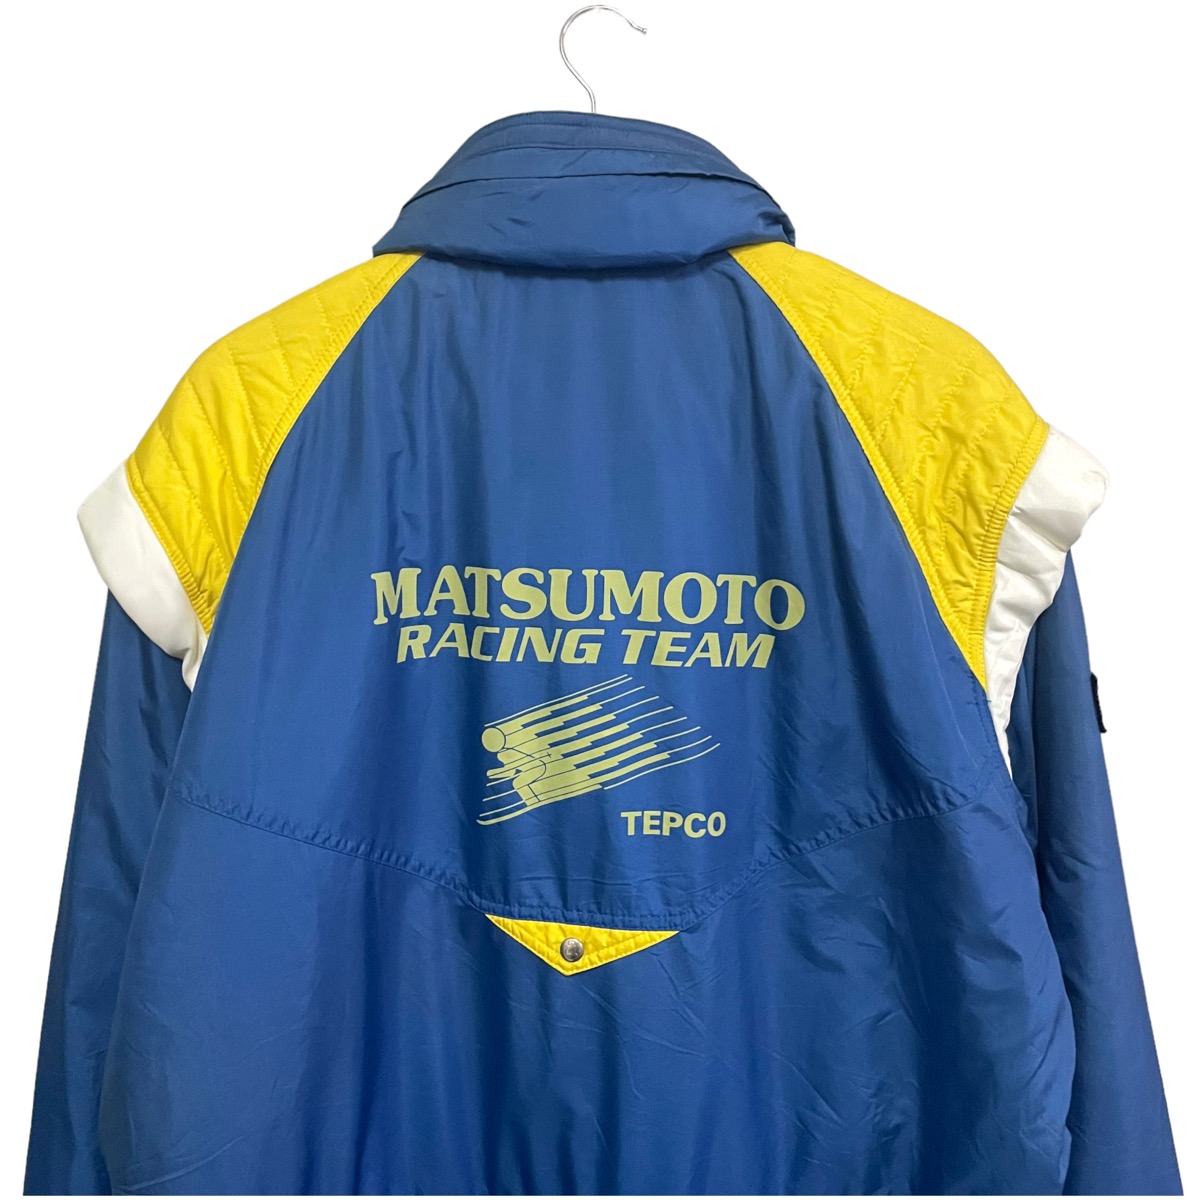 💥VINTAGE MATSUMOTO x ASICS JAPAN RACING TEAM JACKET - 2